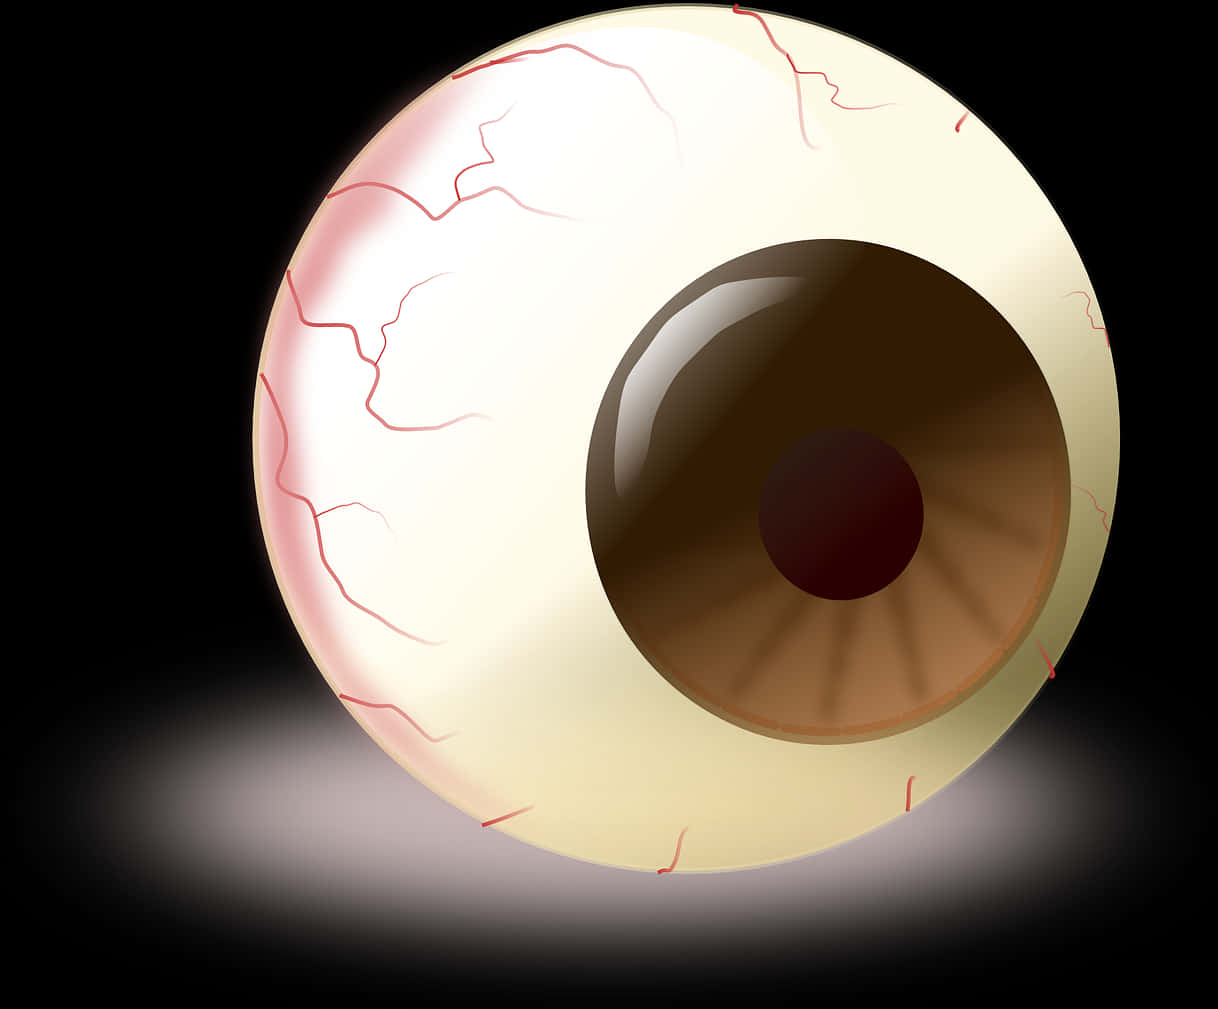 A Close-up Of A Human Eyeball